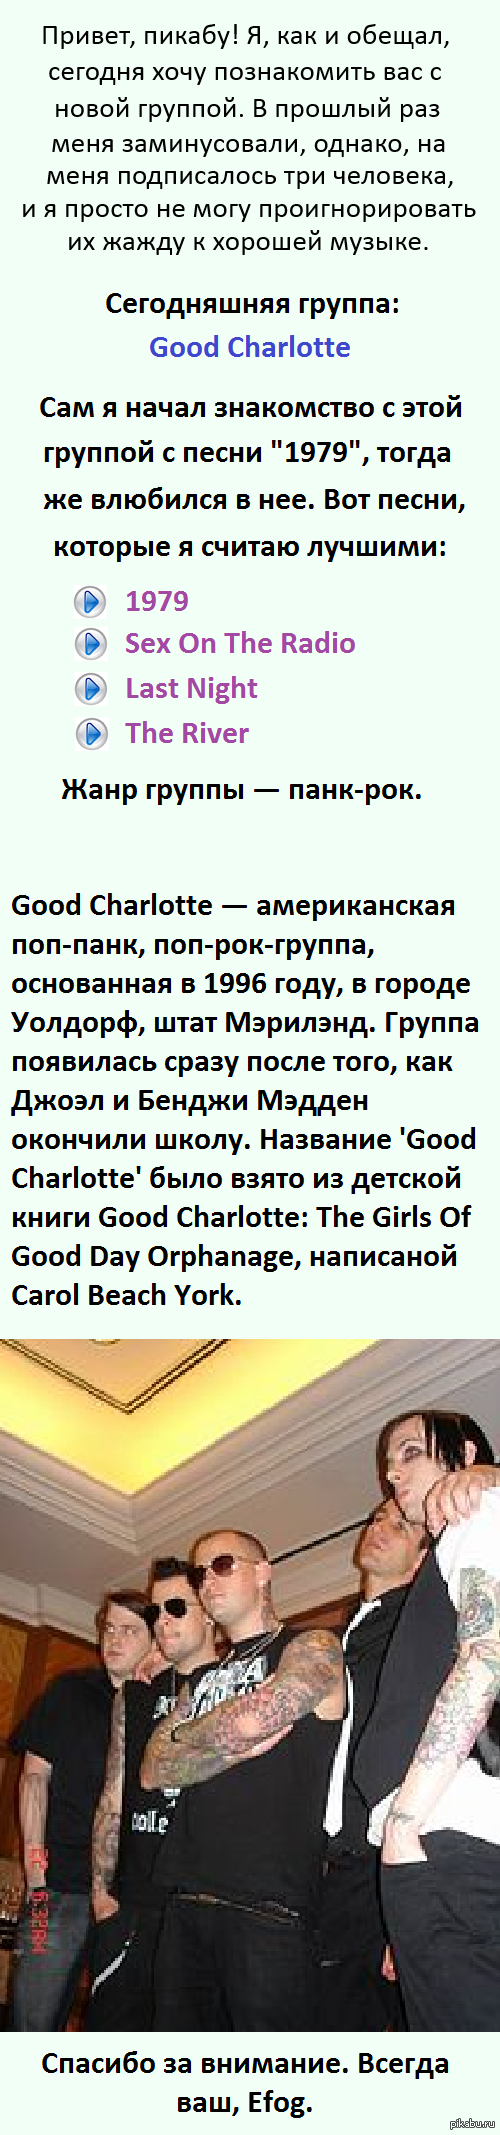  - !  .   - Good Charlotte.  : 1979, The River, Sex On The Radio, Last Night